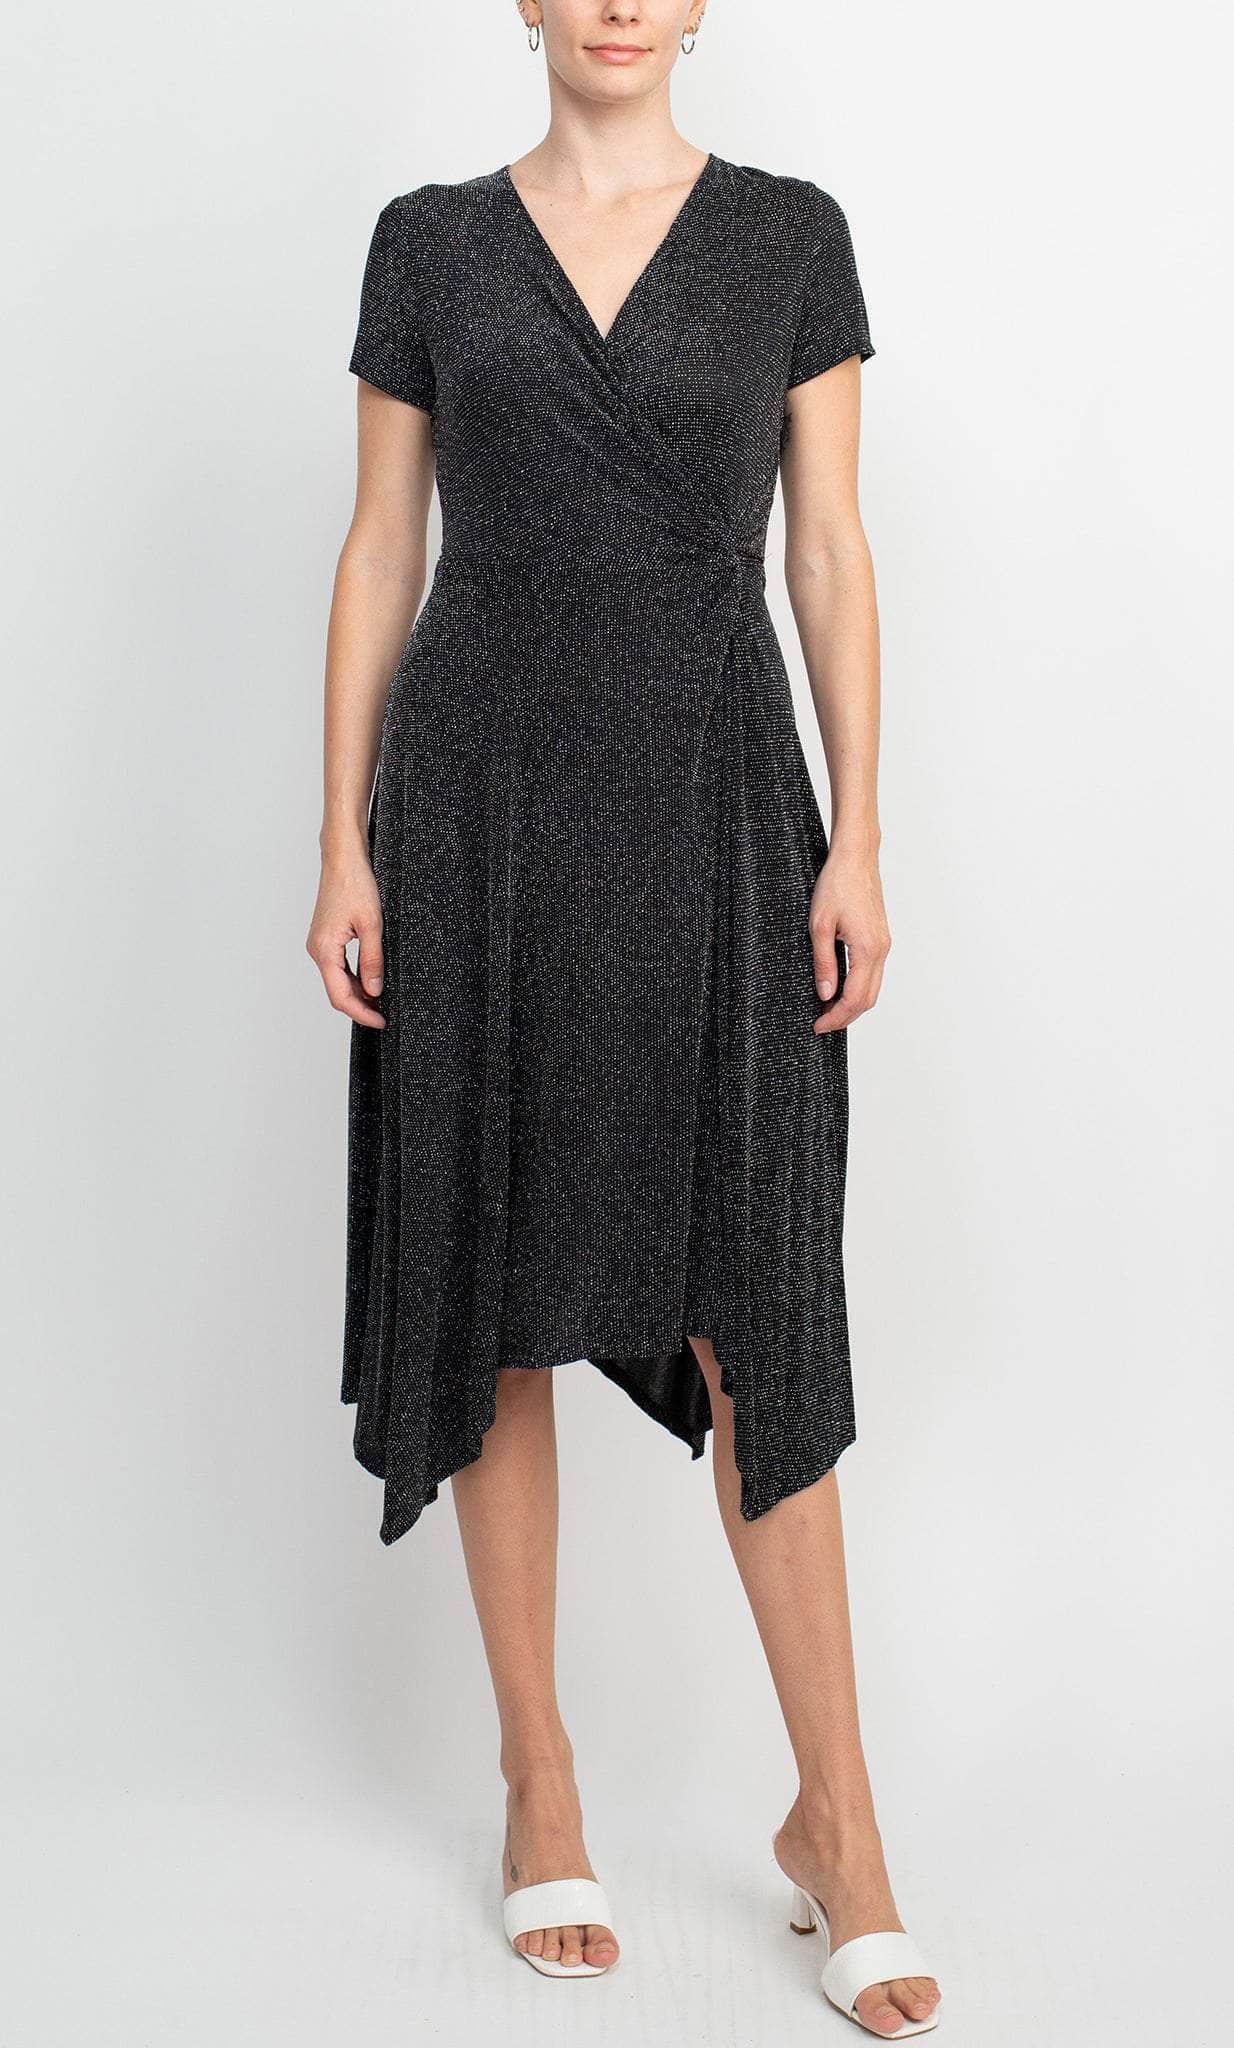 Scarlett S292150 - Short Sleeve High Low Knee-Length Dress Cocktail Dresses 10 / Black Silver